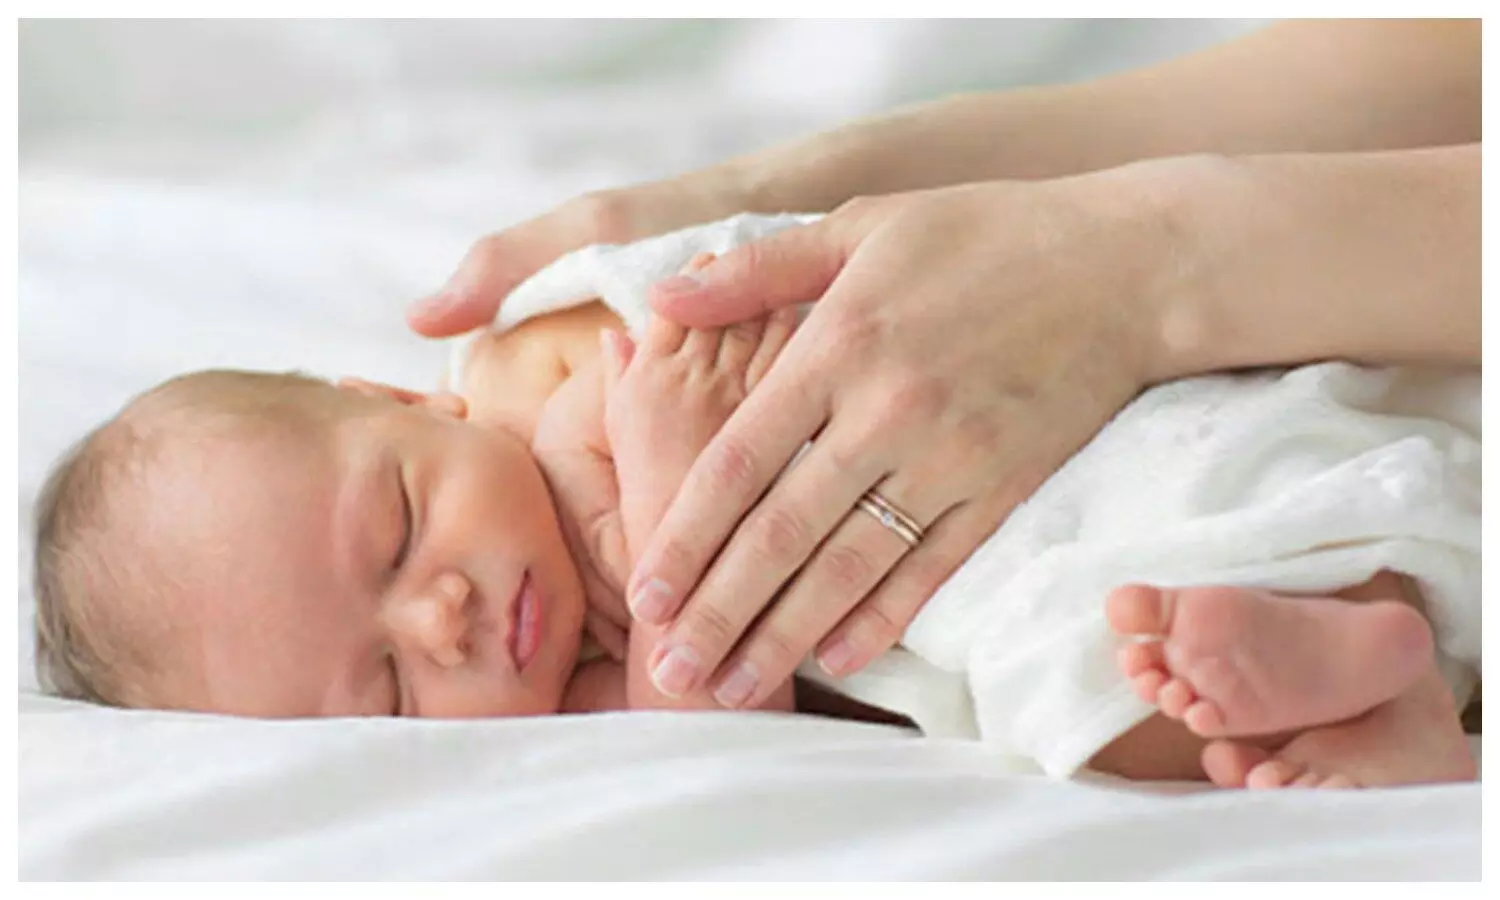 Newborn Baby Health: